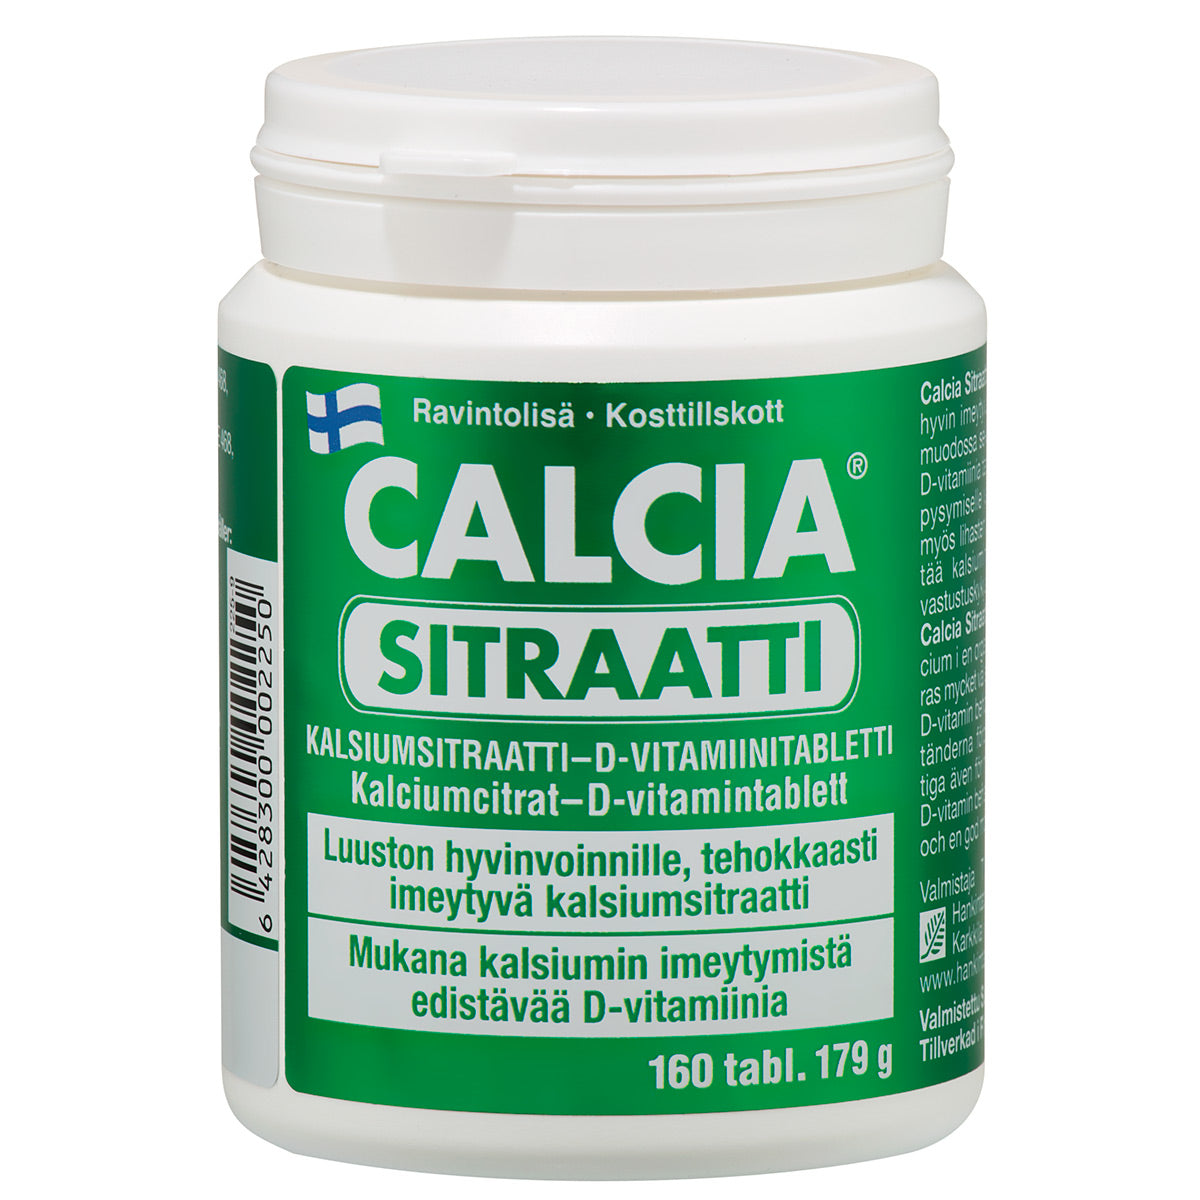 Calcia Sitraatti - Kalsiumsitraatti-D-vitamiinitabletti 160 tabl.